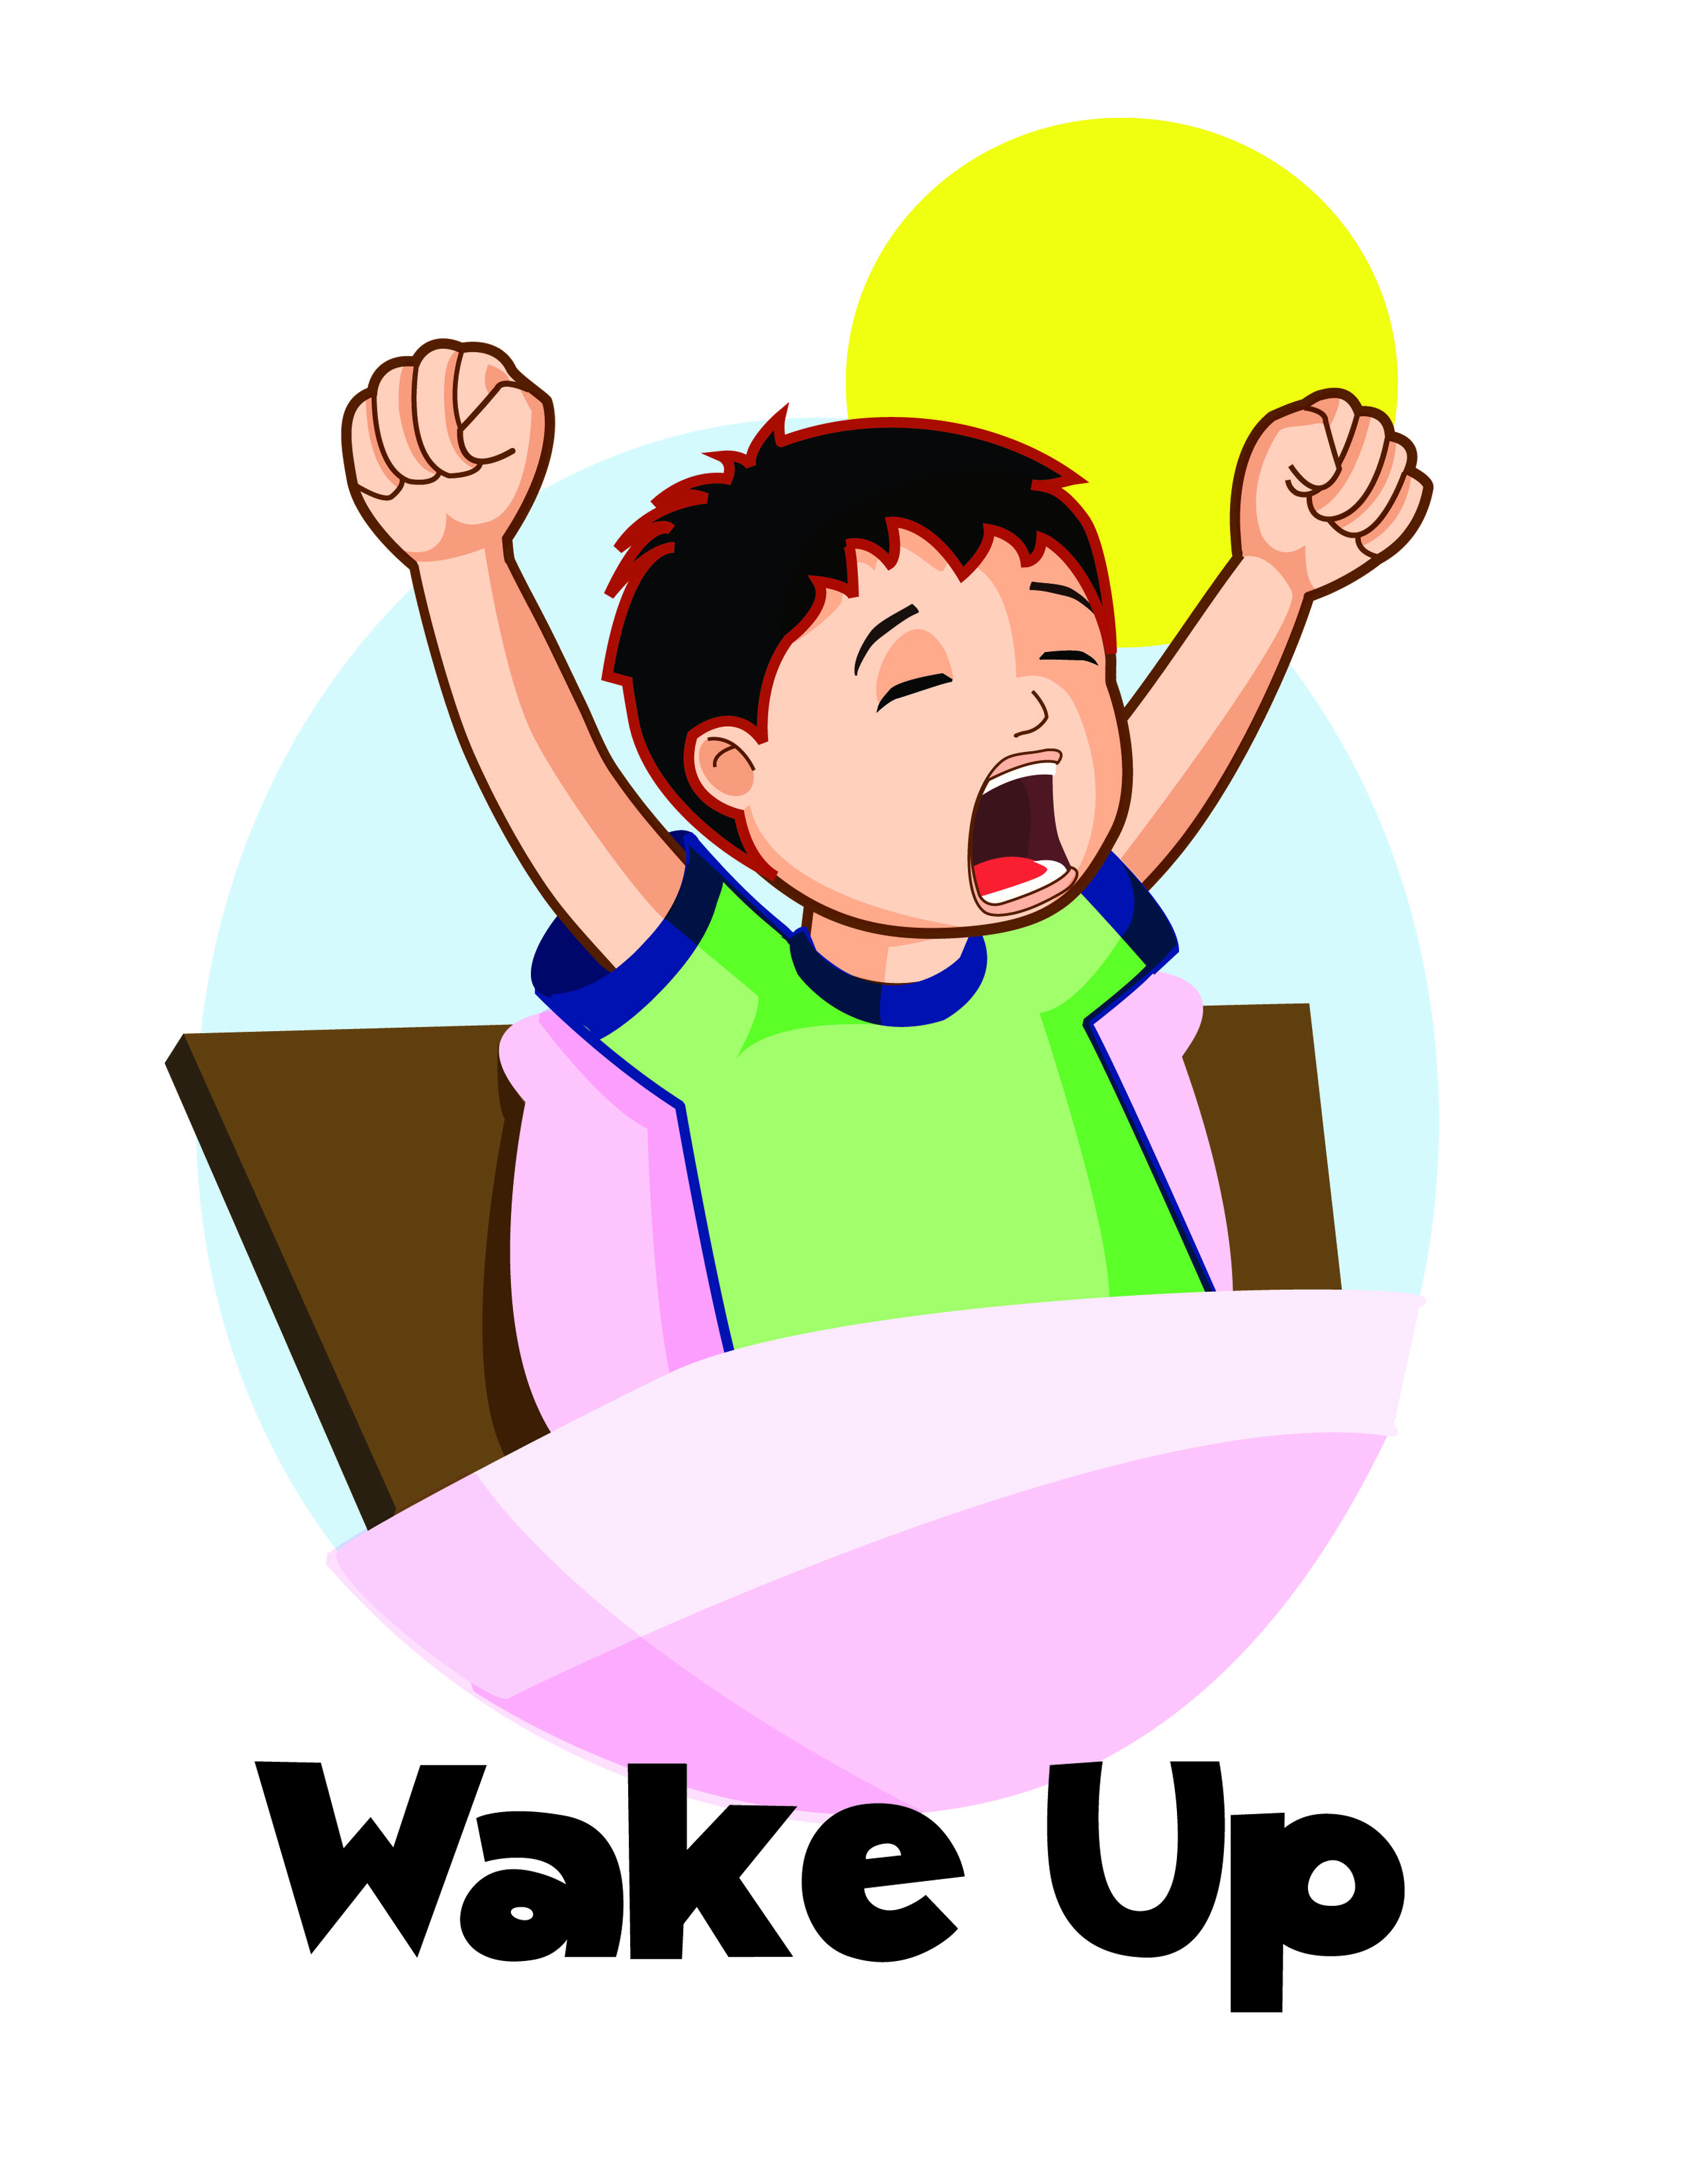 ... Boy waking up - Little bo